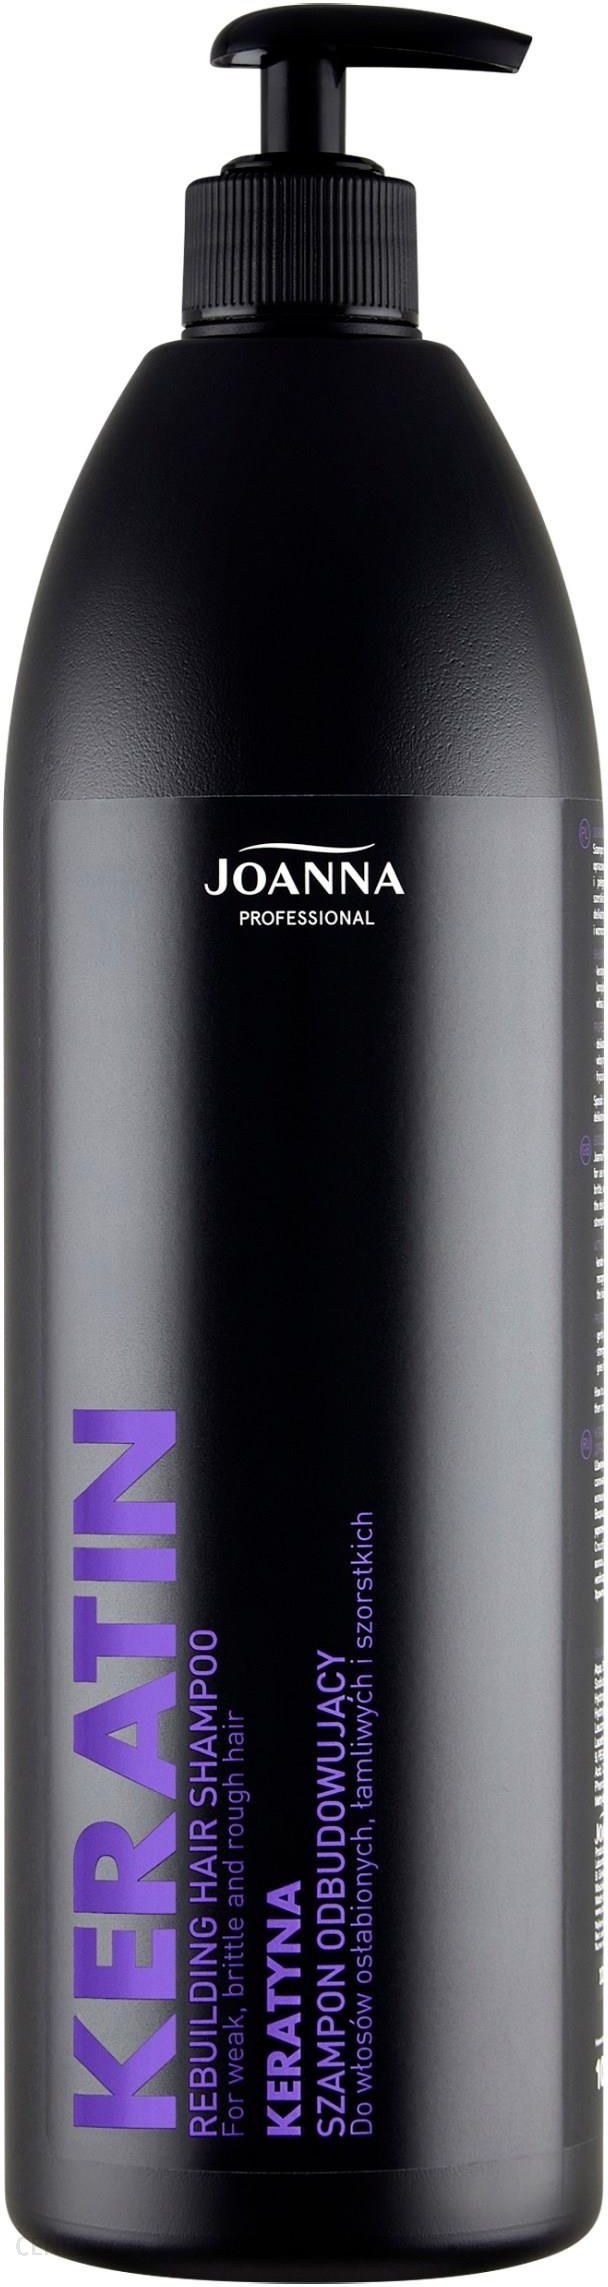 joanna szampon opinie